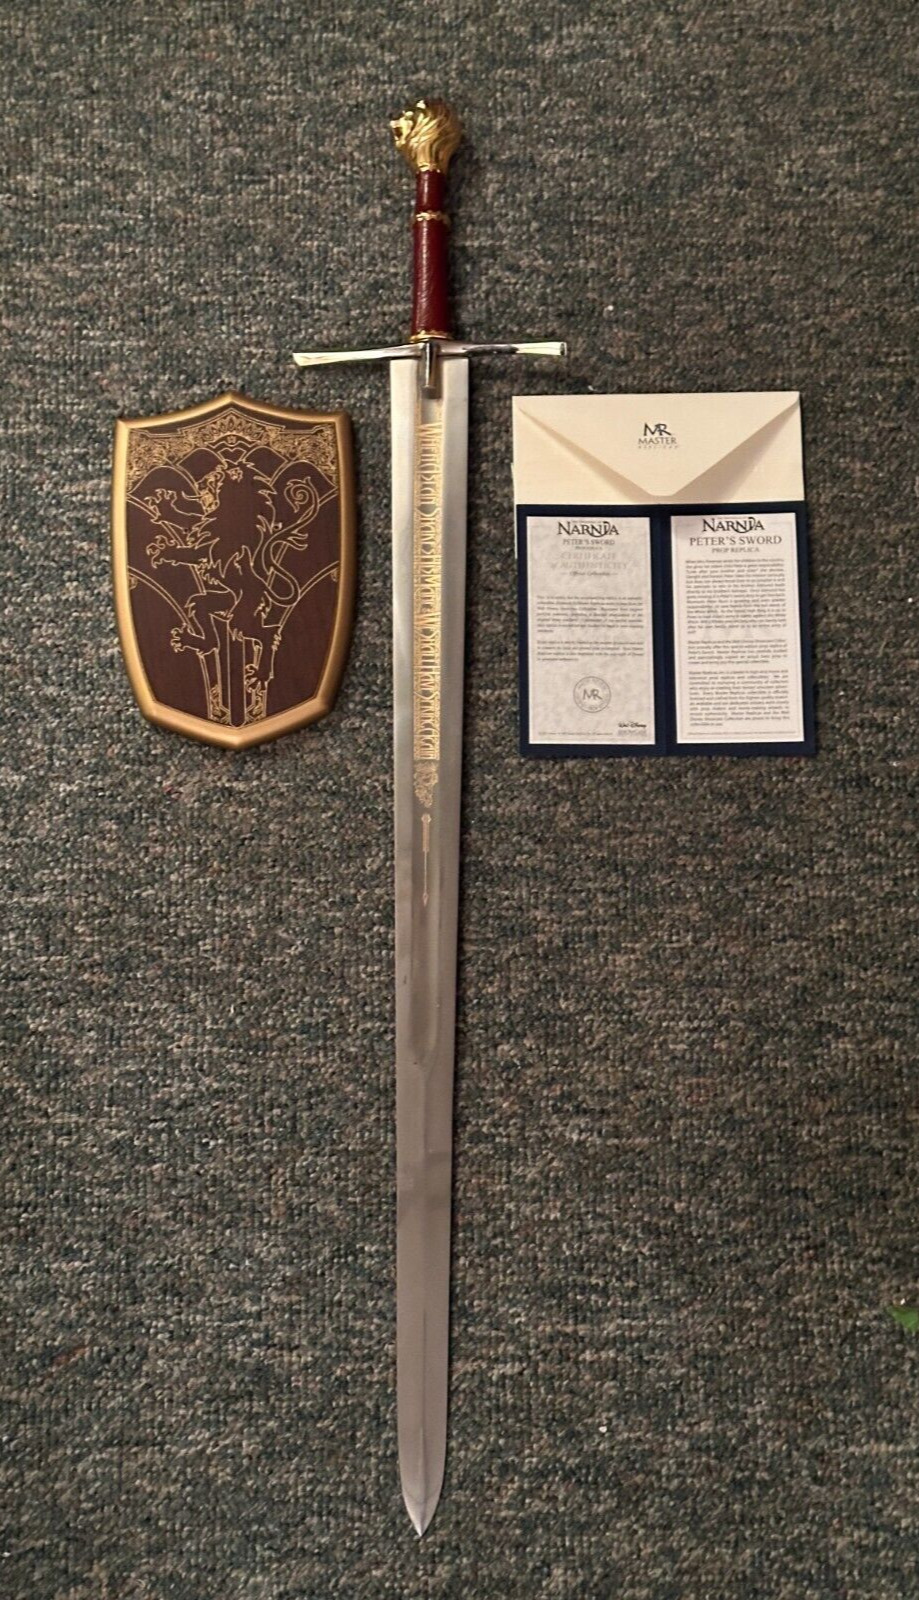 Disney Master Replica Chronicles Of Narnia Peters Sword Prop